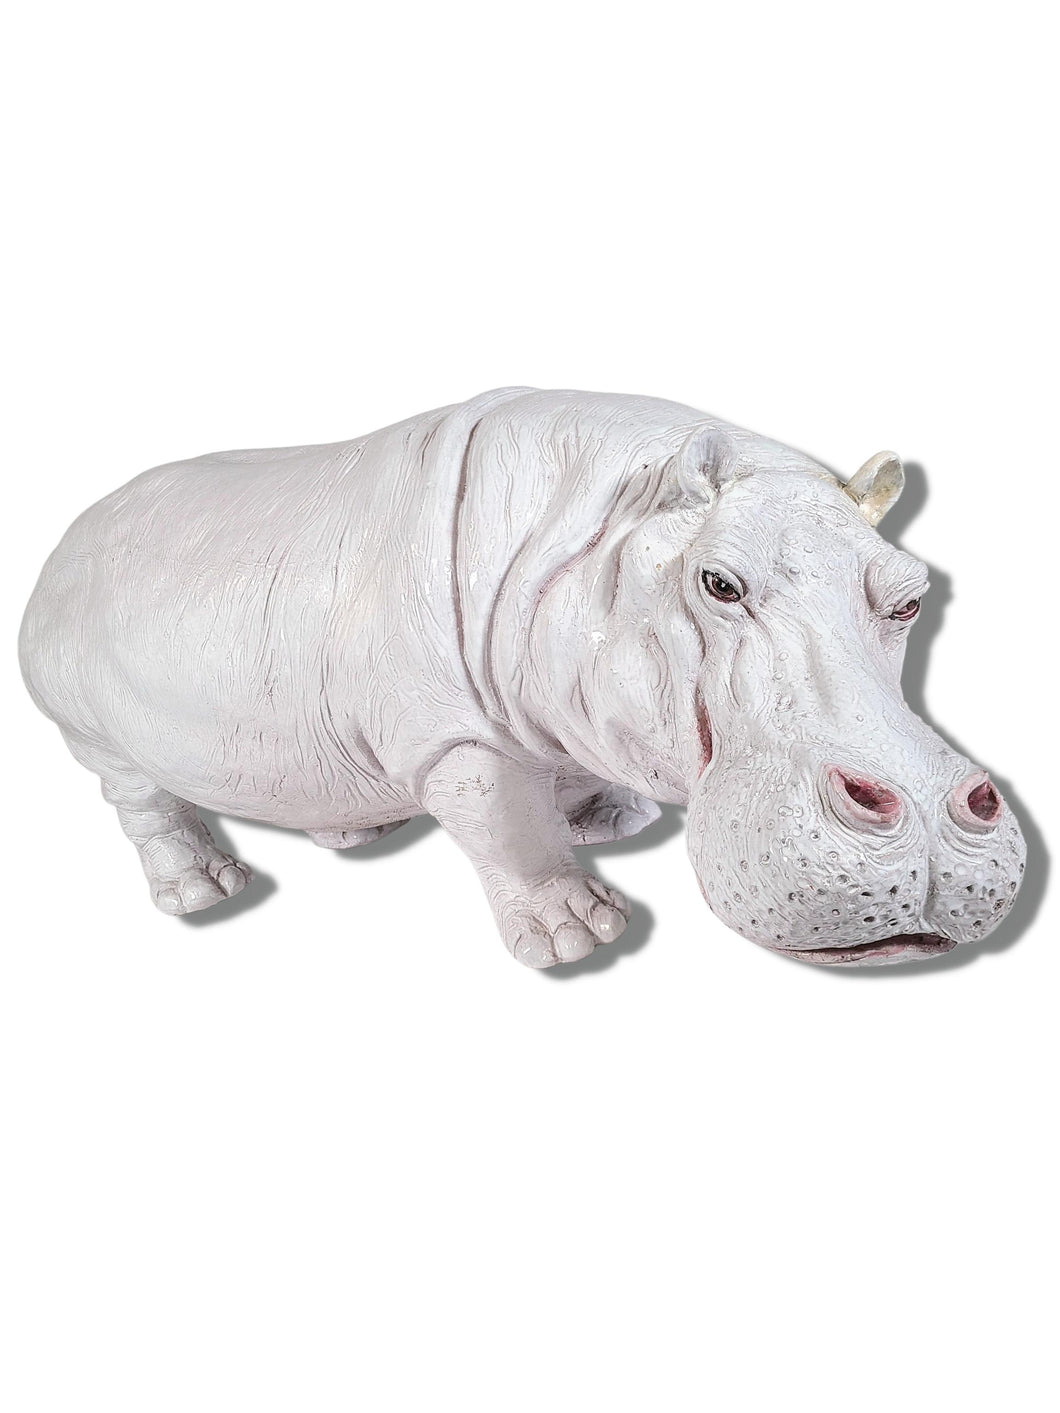 Hippo Terracotta Sculpture